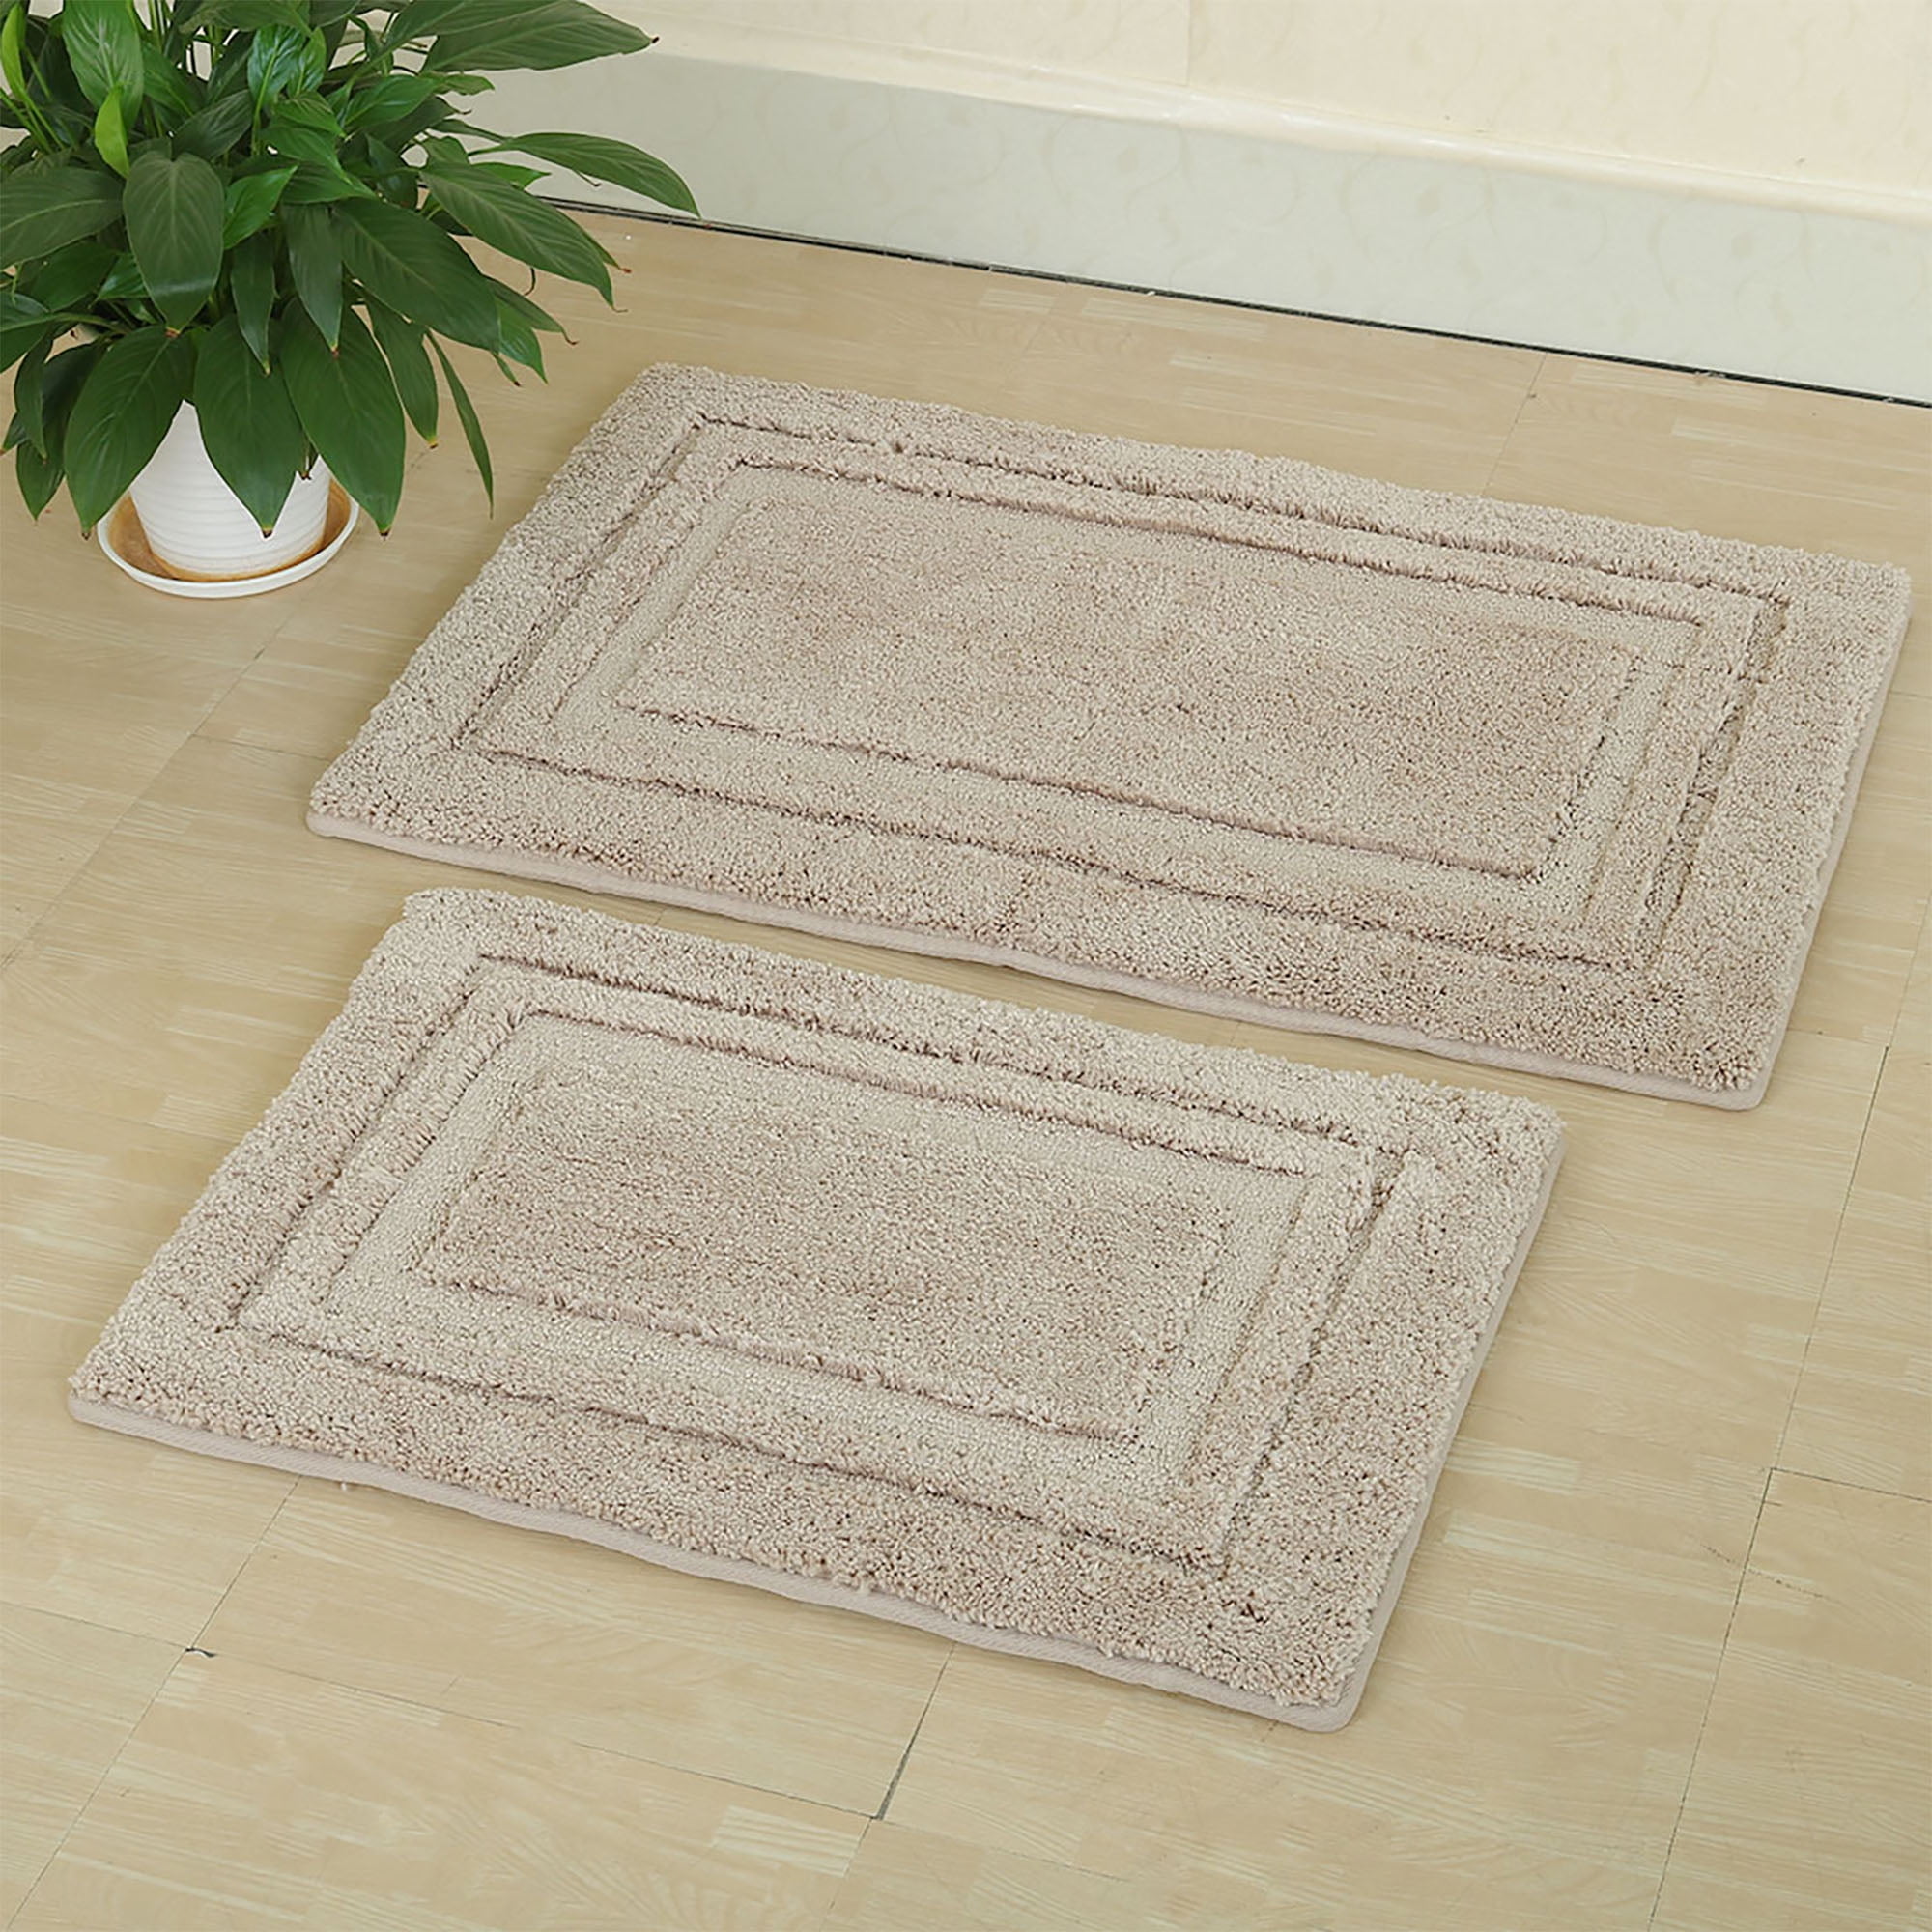 Piccocasa Bathroom Kitchen Door Memory Cotton Pad Carpet Floor Mat